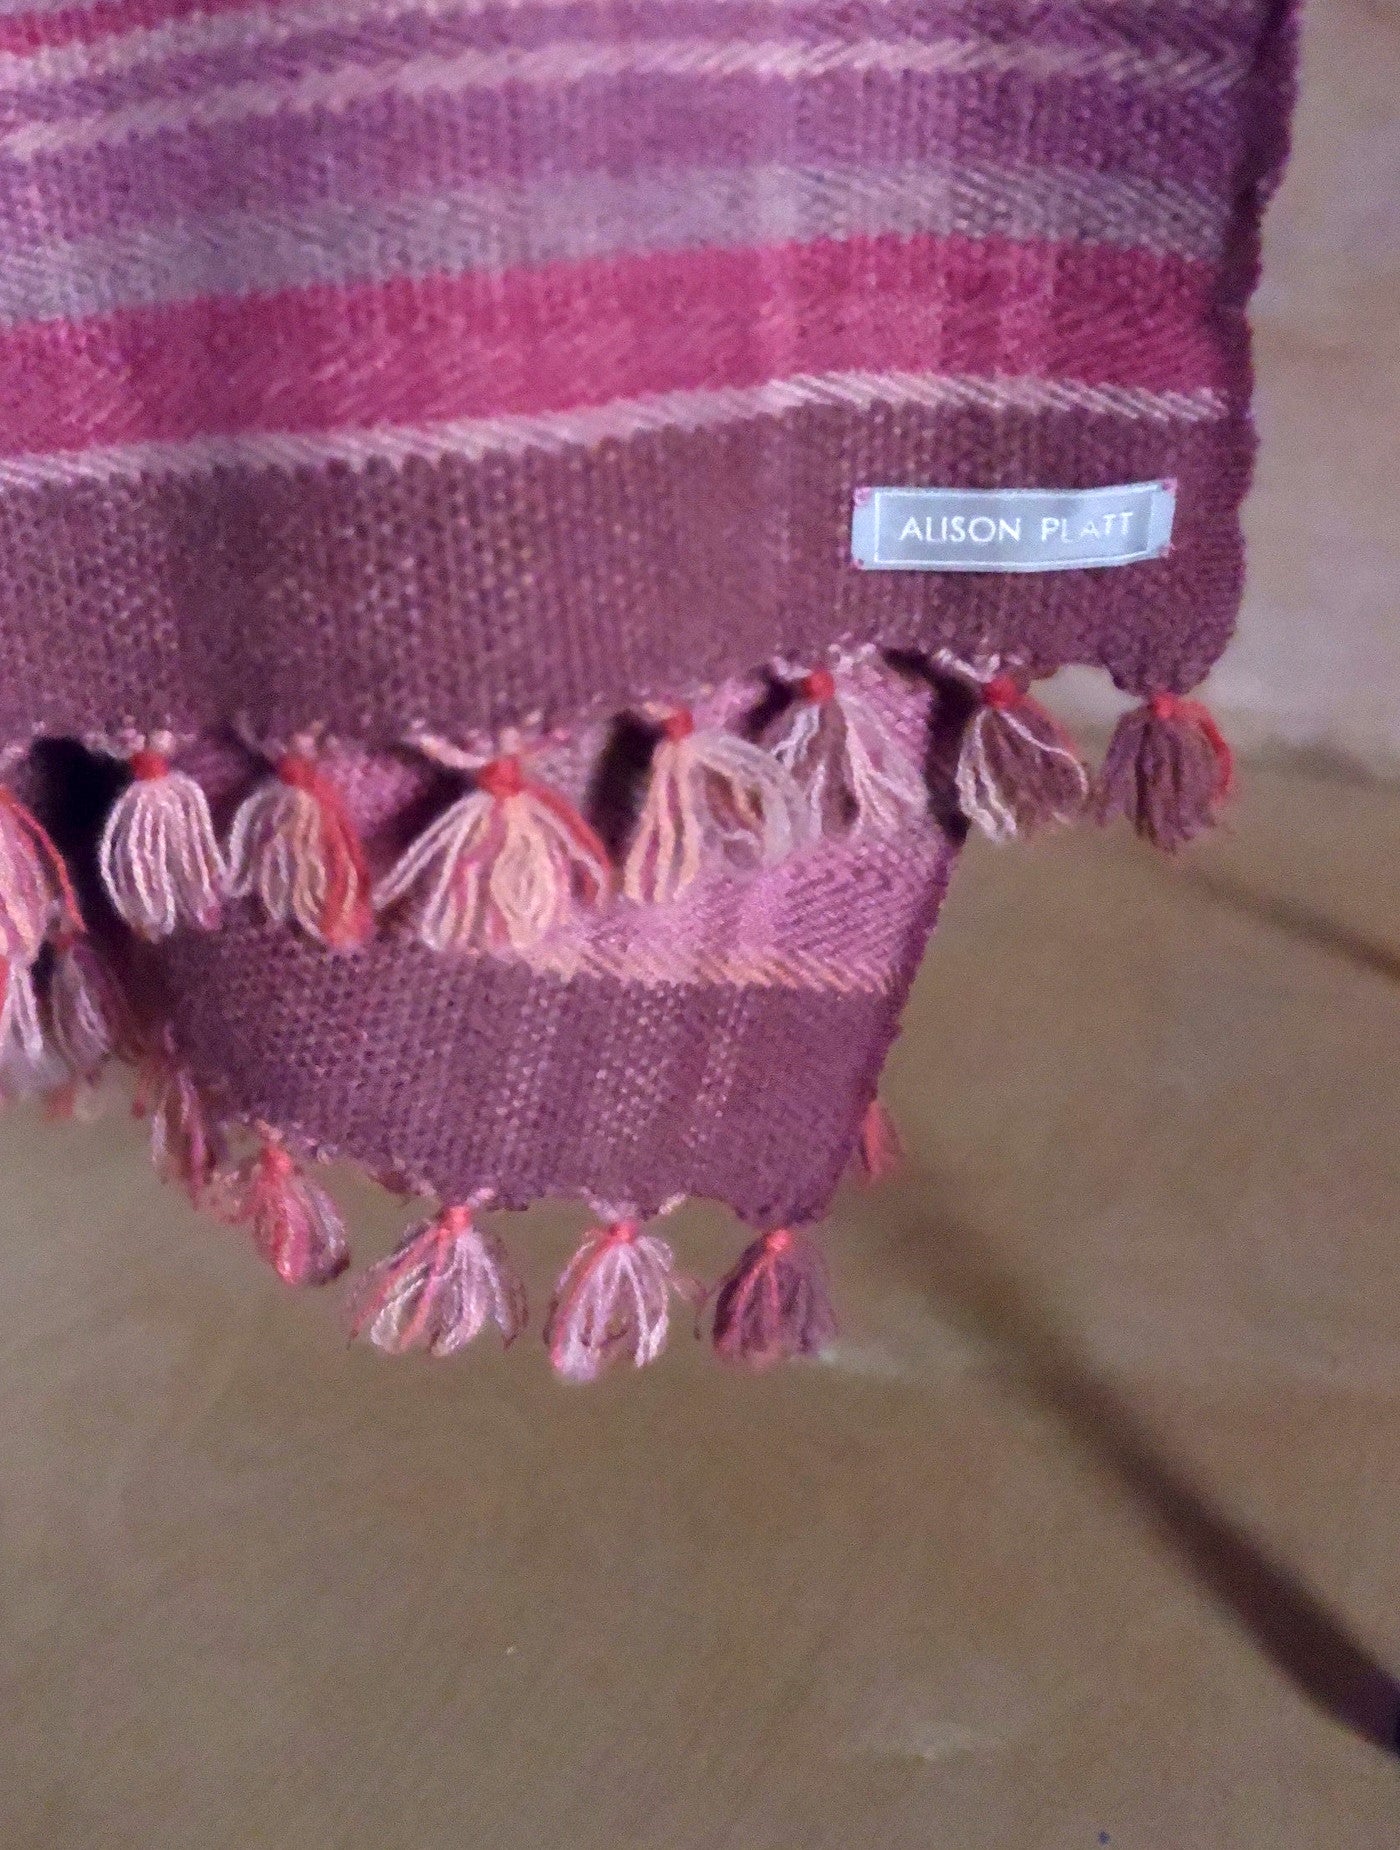 Alison Platt Soft Autumn Mulberry/Plum handwoven shawl flat Soft Autumn Mulberry/Plum handwoven shawl